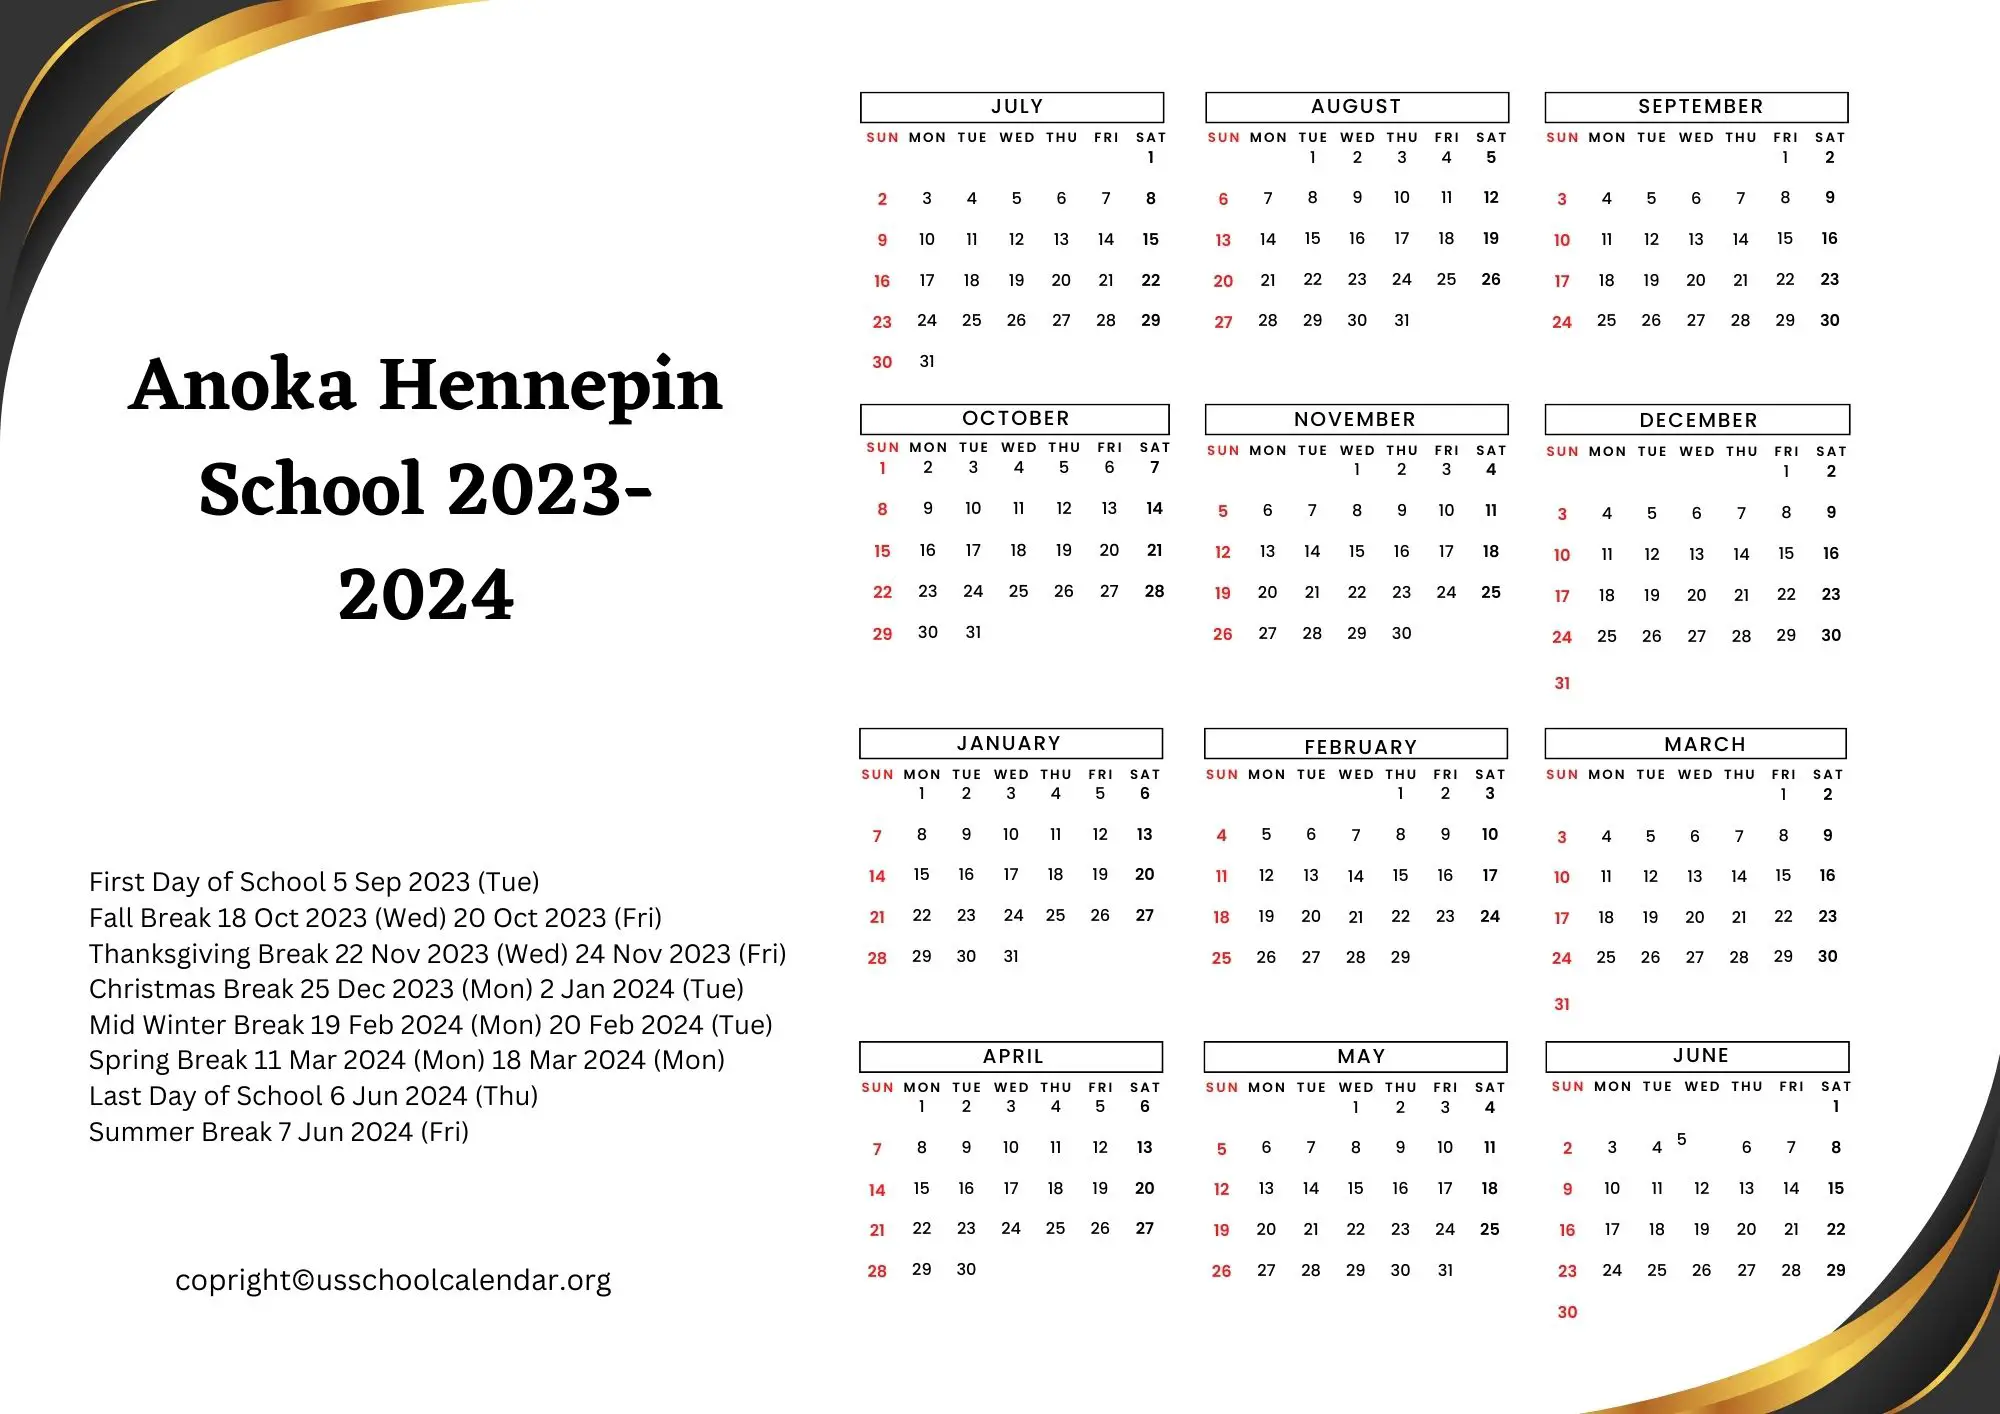 Anoka Hennepin Calendar 2025 2026